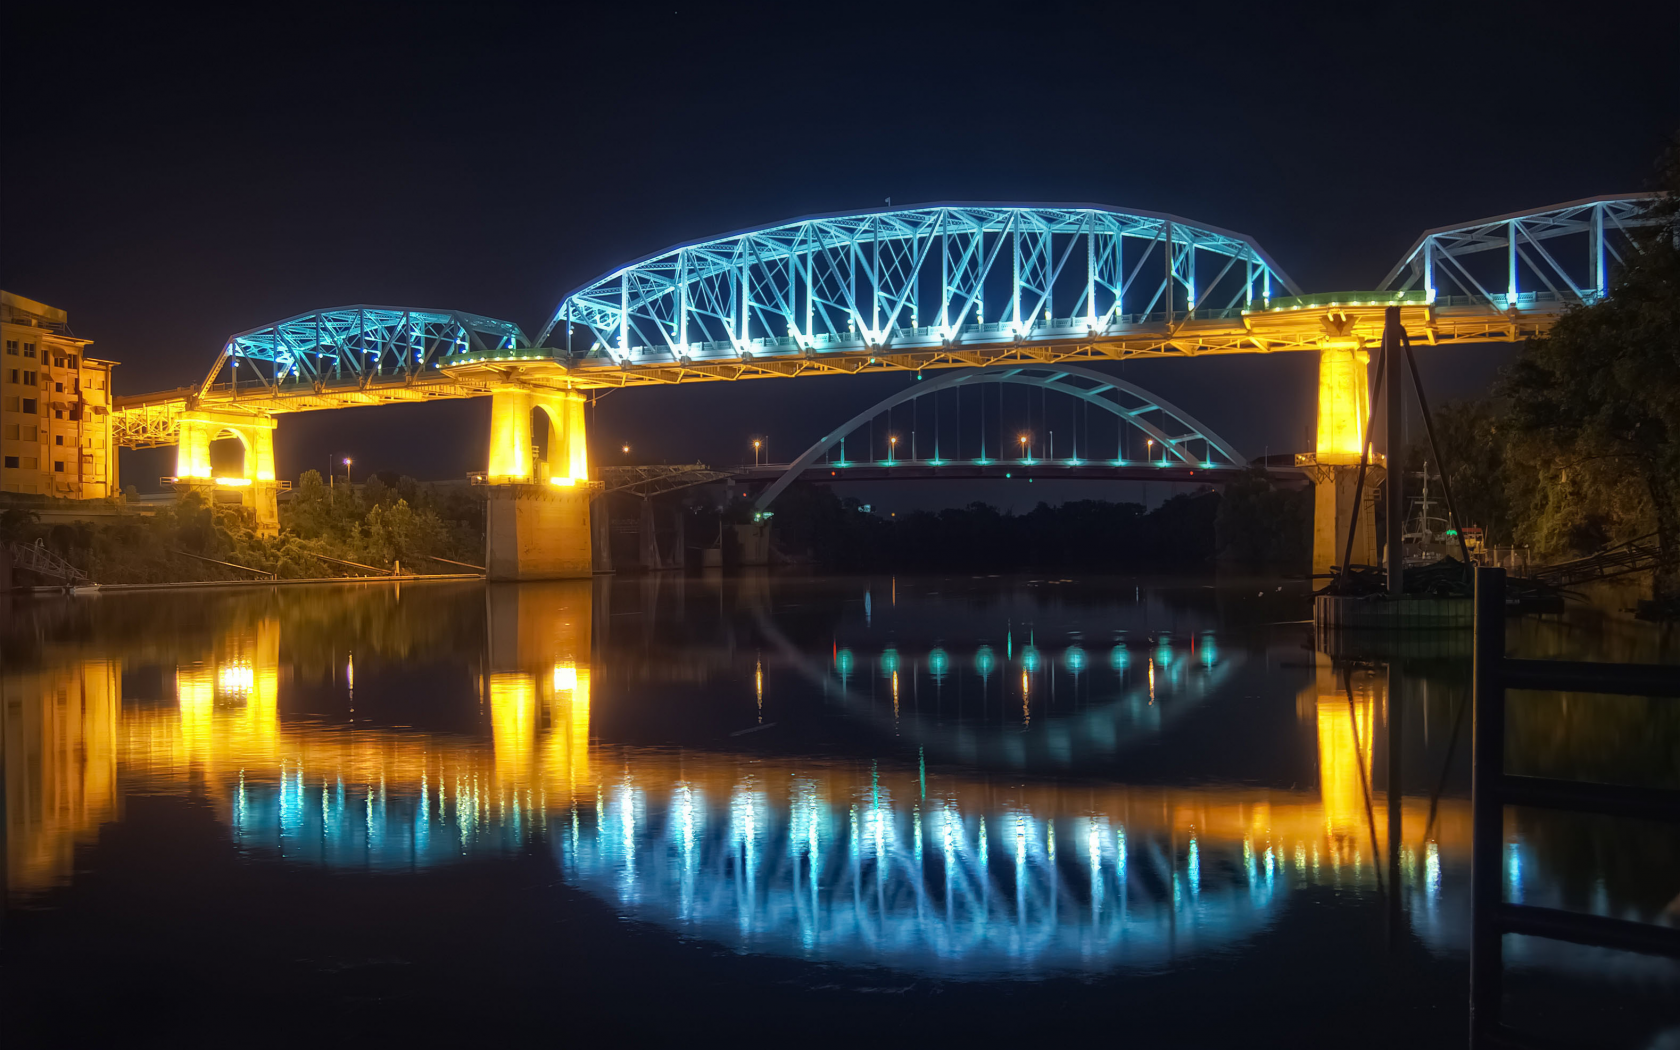 отражение, огни, вода, мост, река